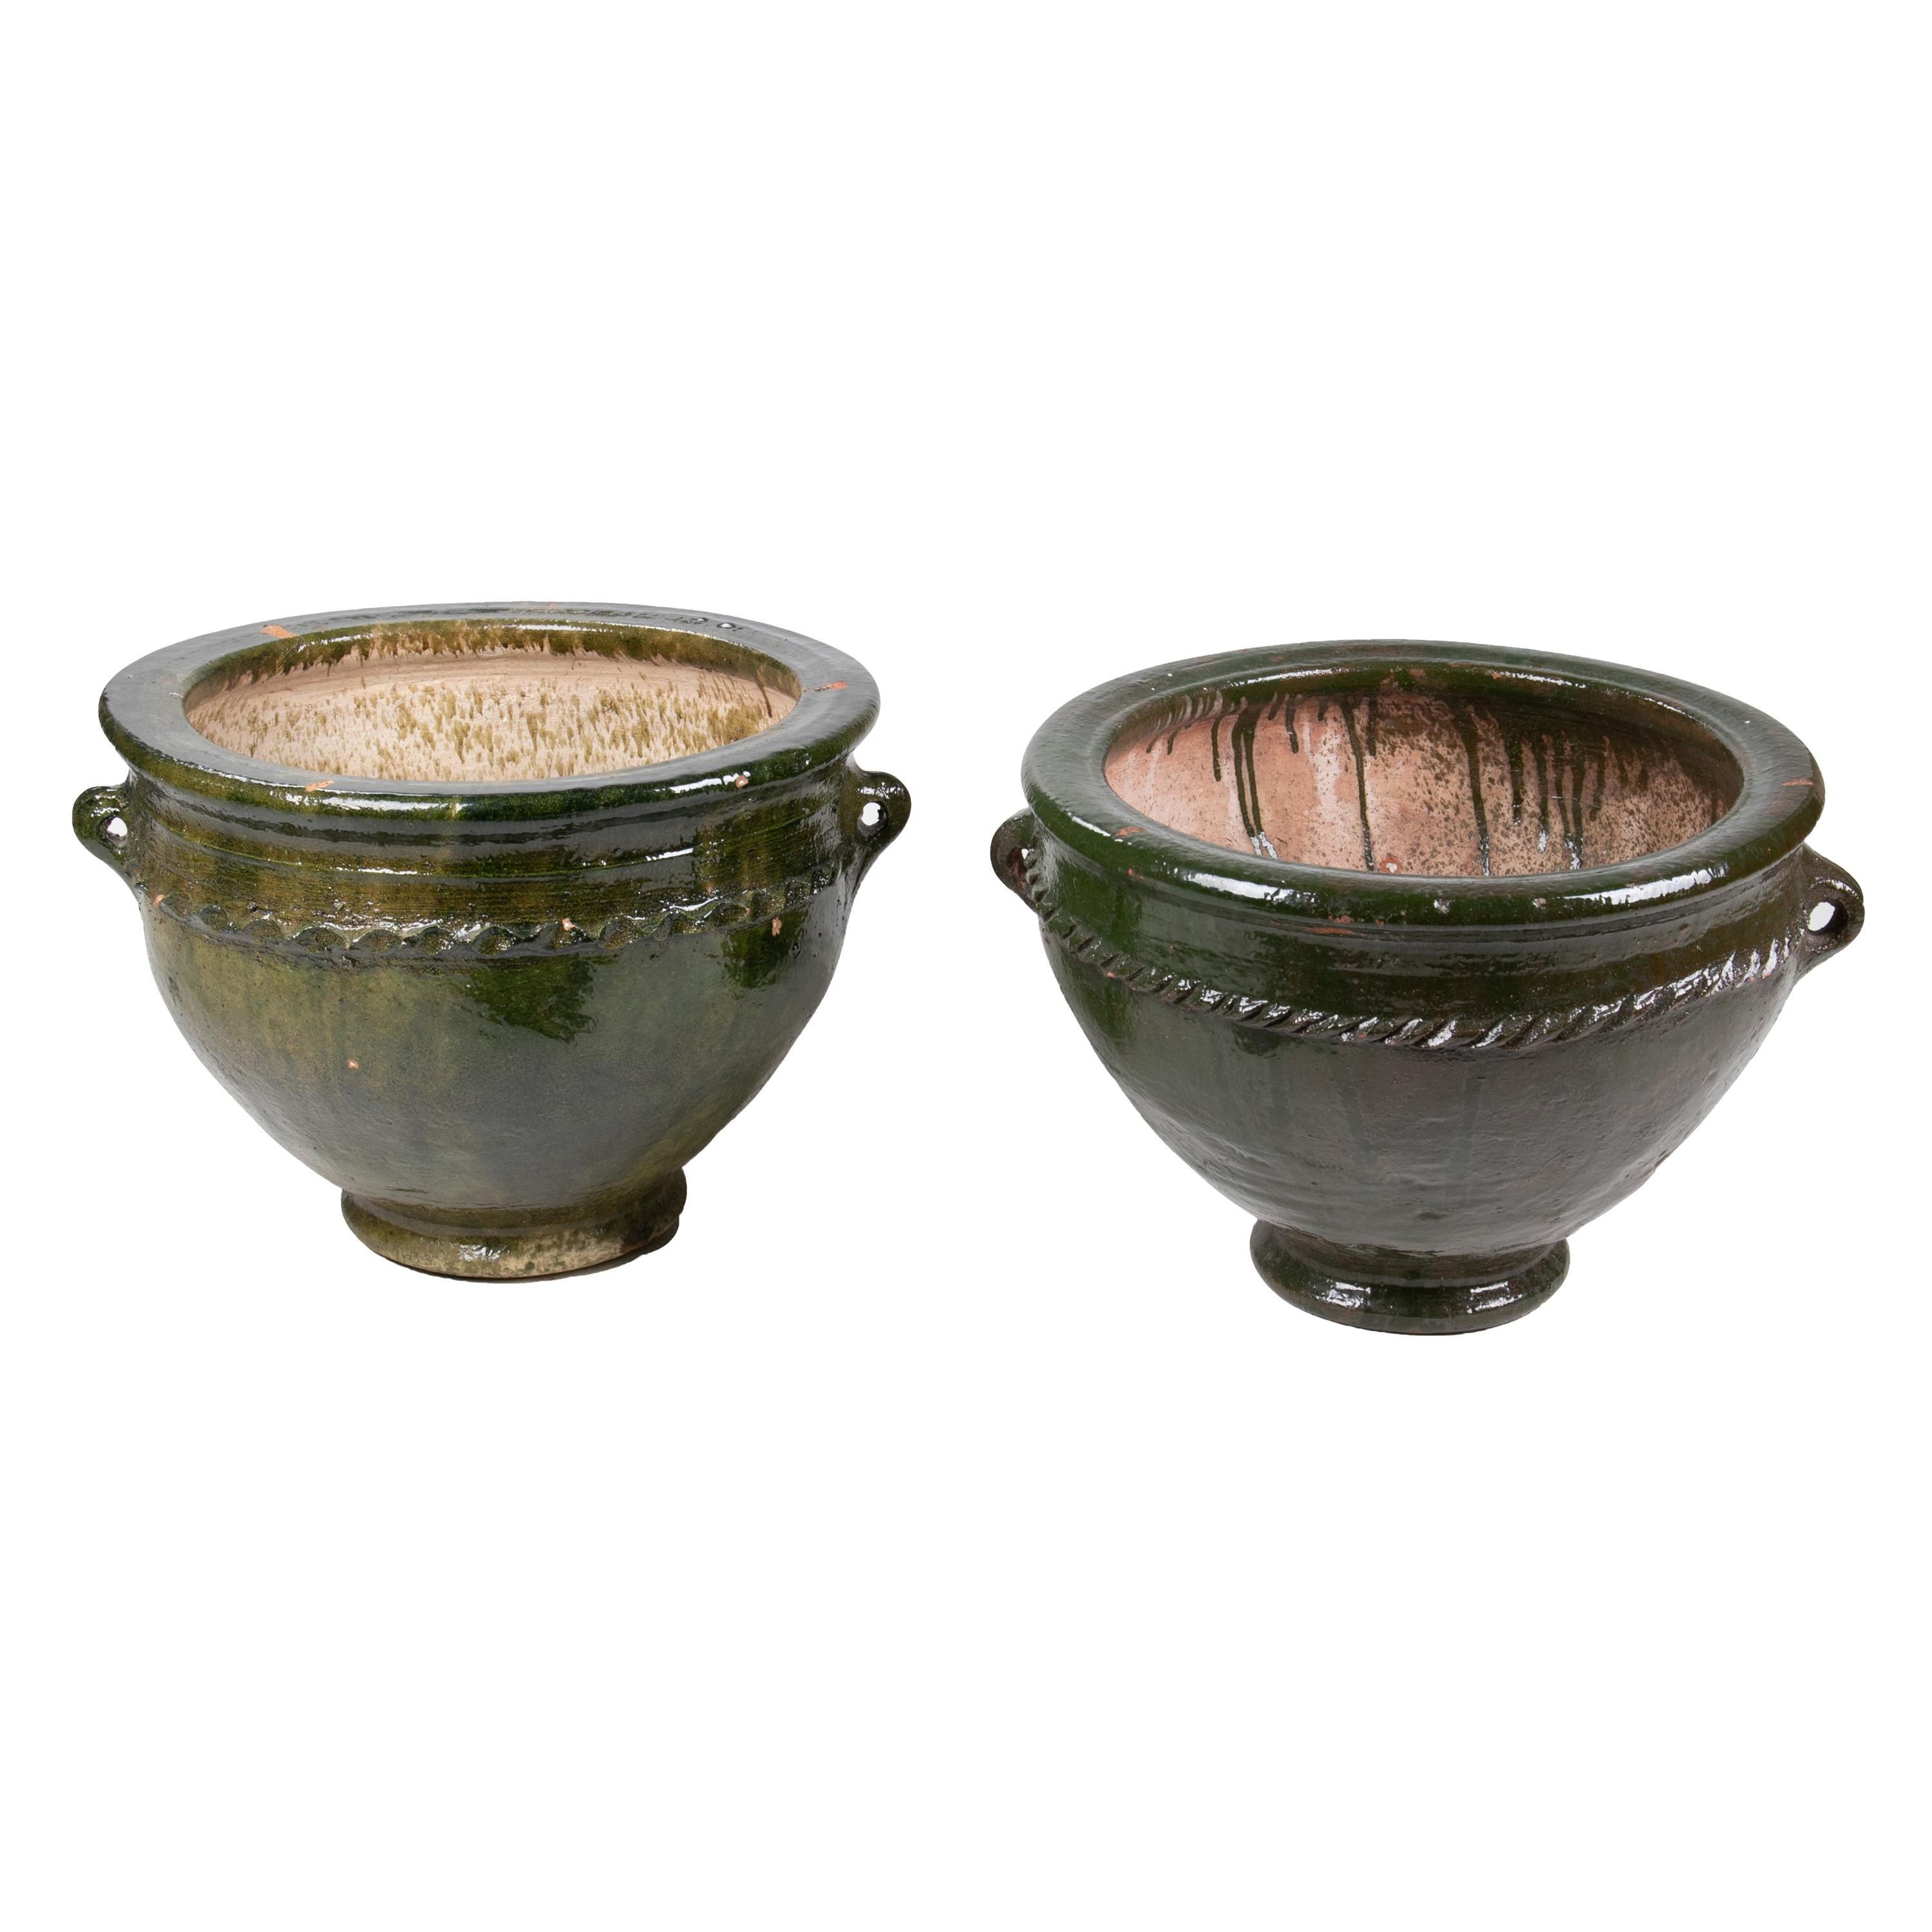 Pair of Glazed Green Ceramic Pots